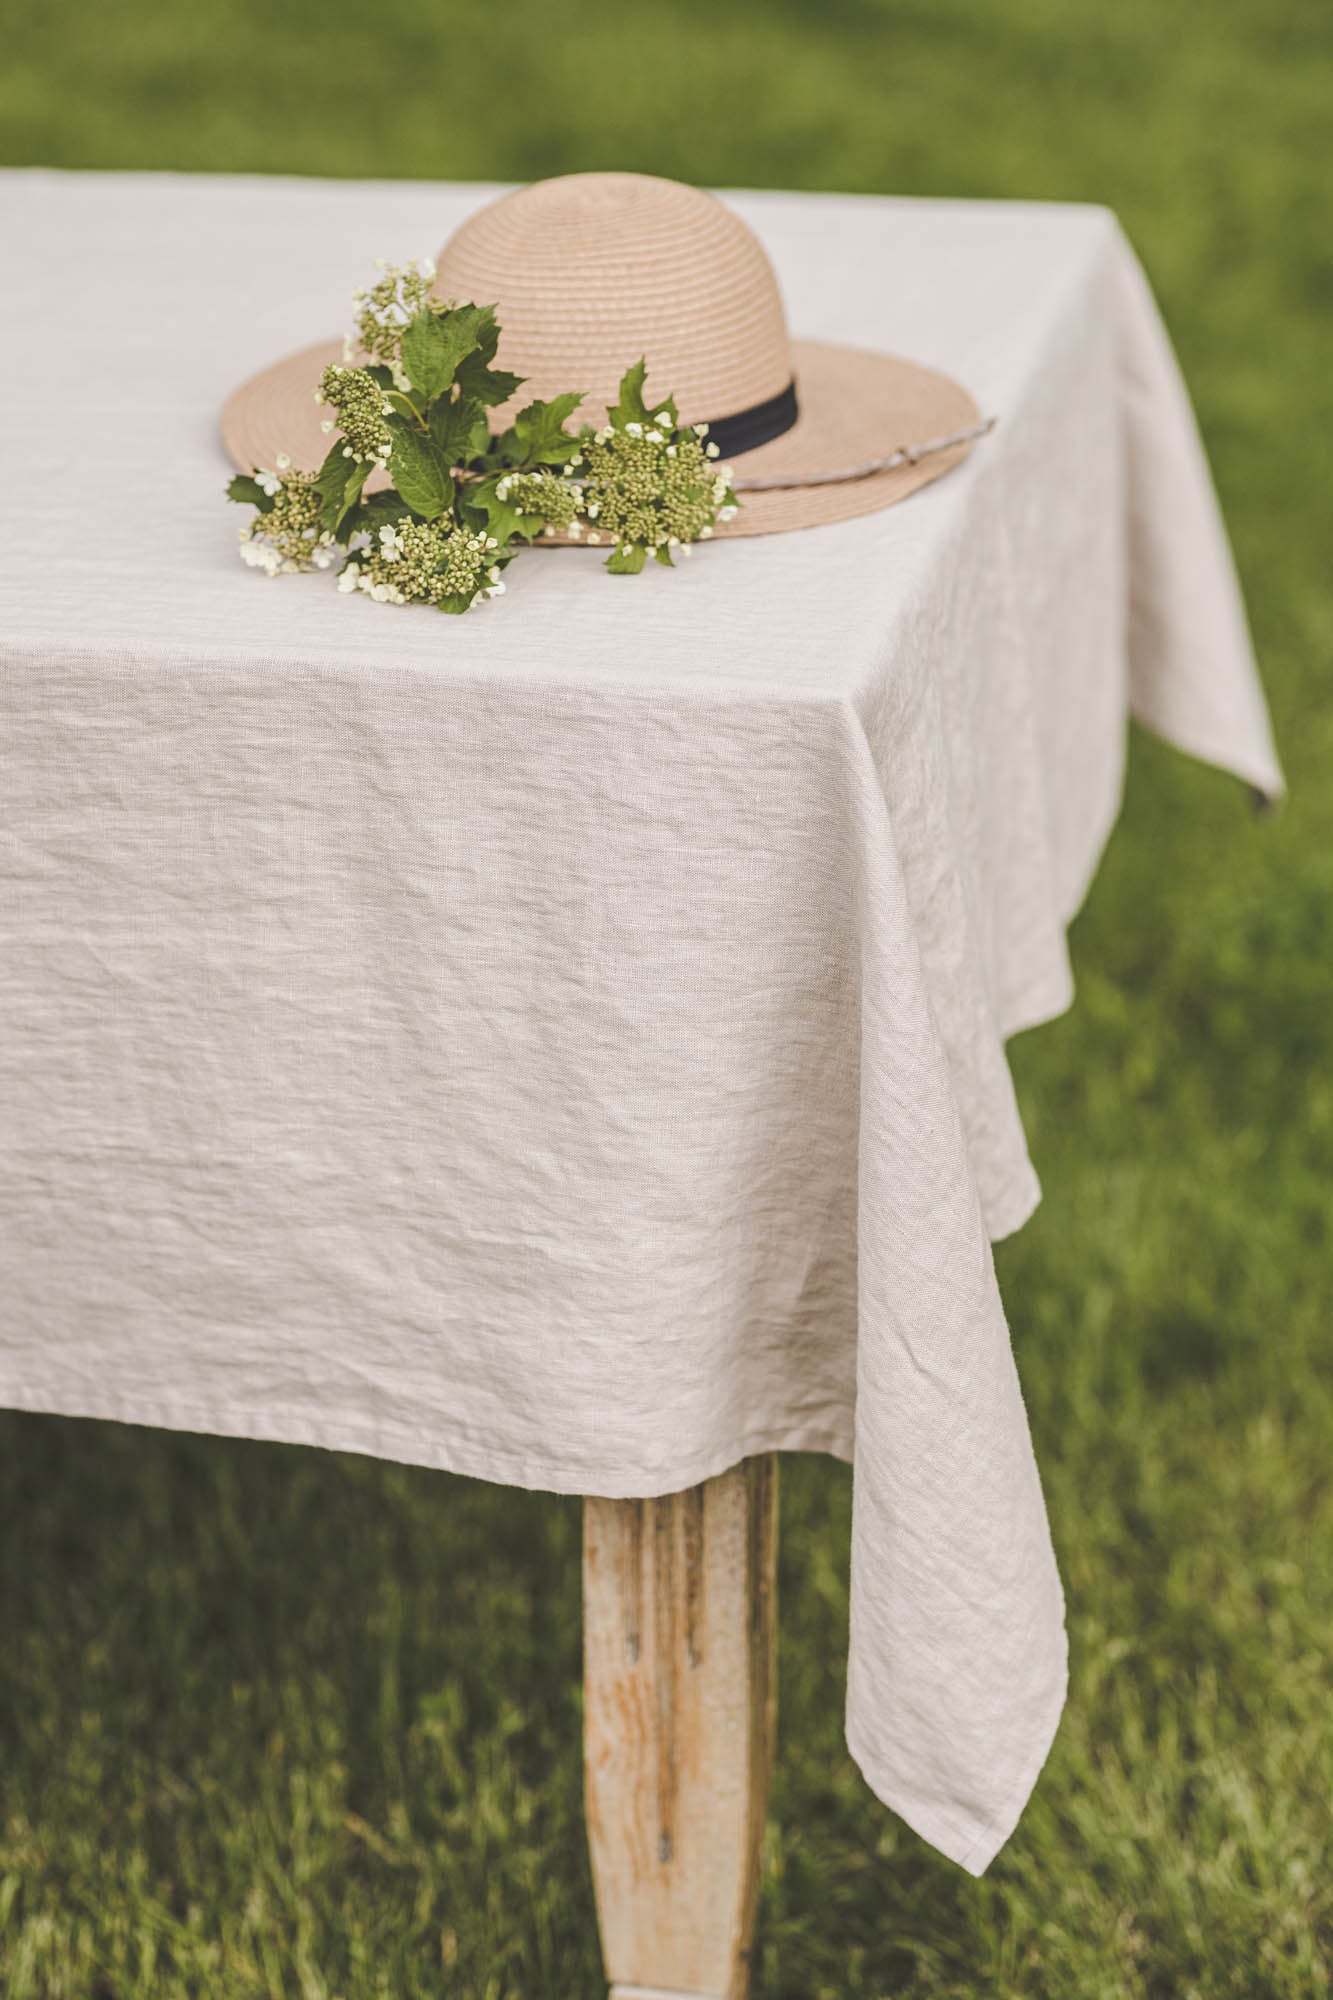 Sand linen tablecloth